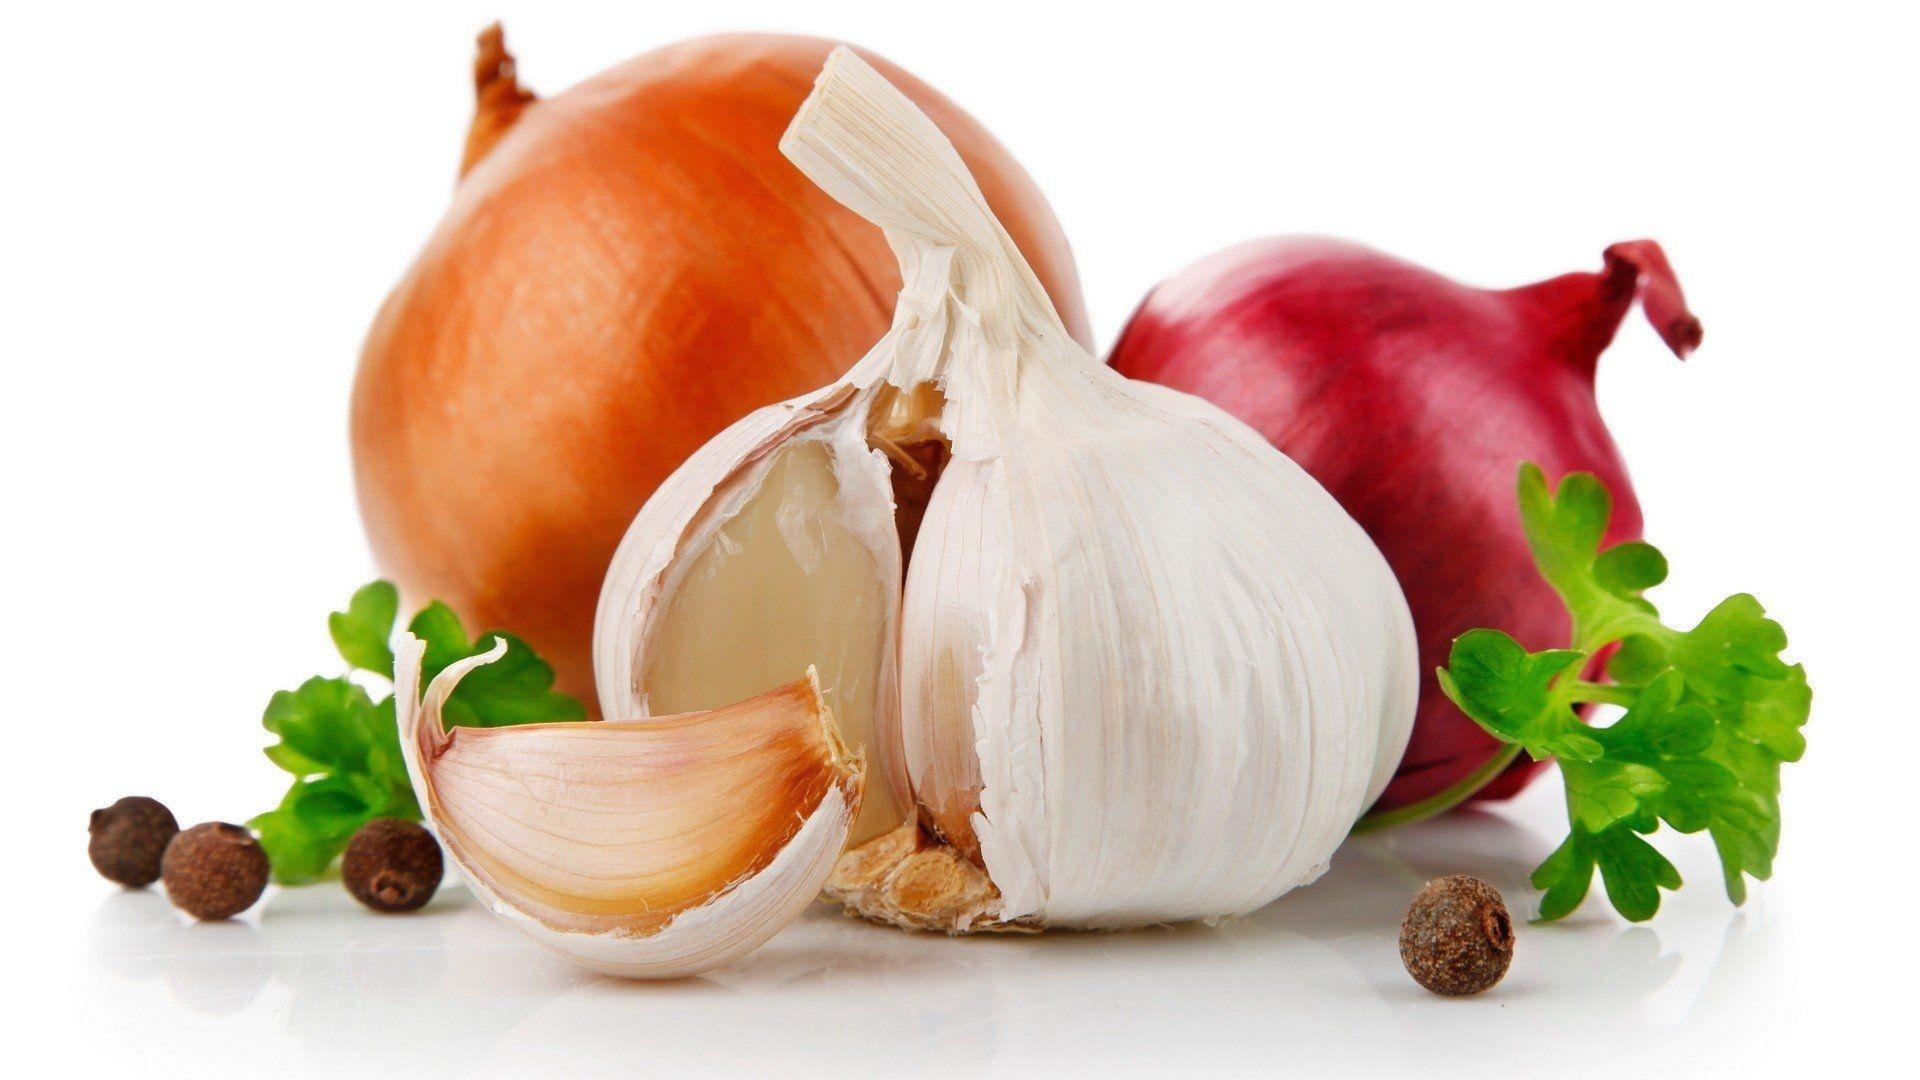 Download 1920x1080 Garlic, Onion, Vegetables Wallpaper